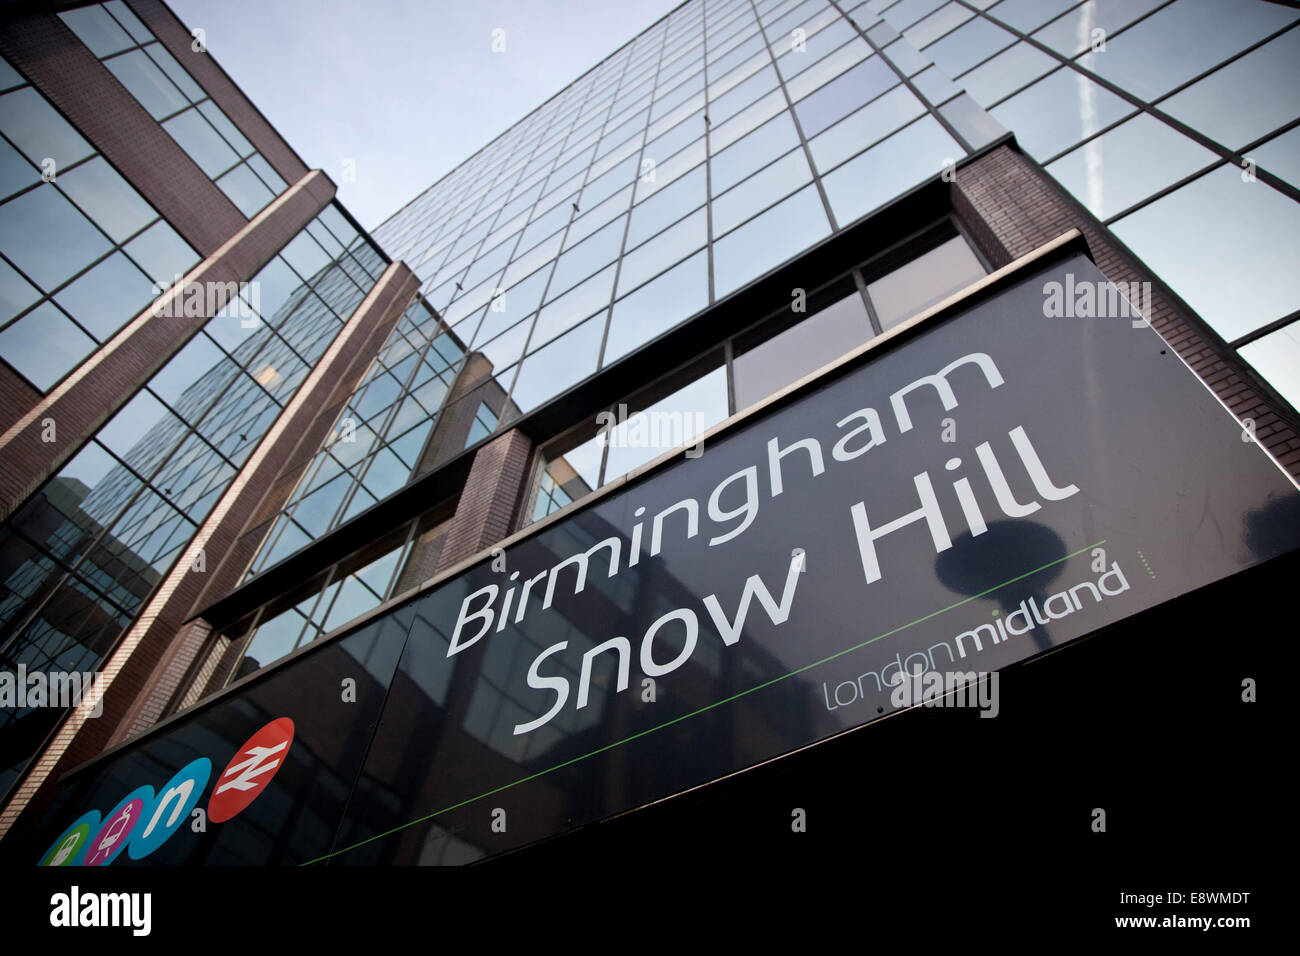 Bahnhof Snow Hill in Birmingham, West Midlands. Stockfoto